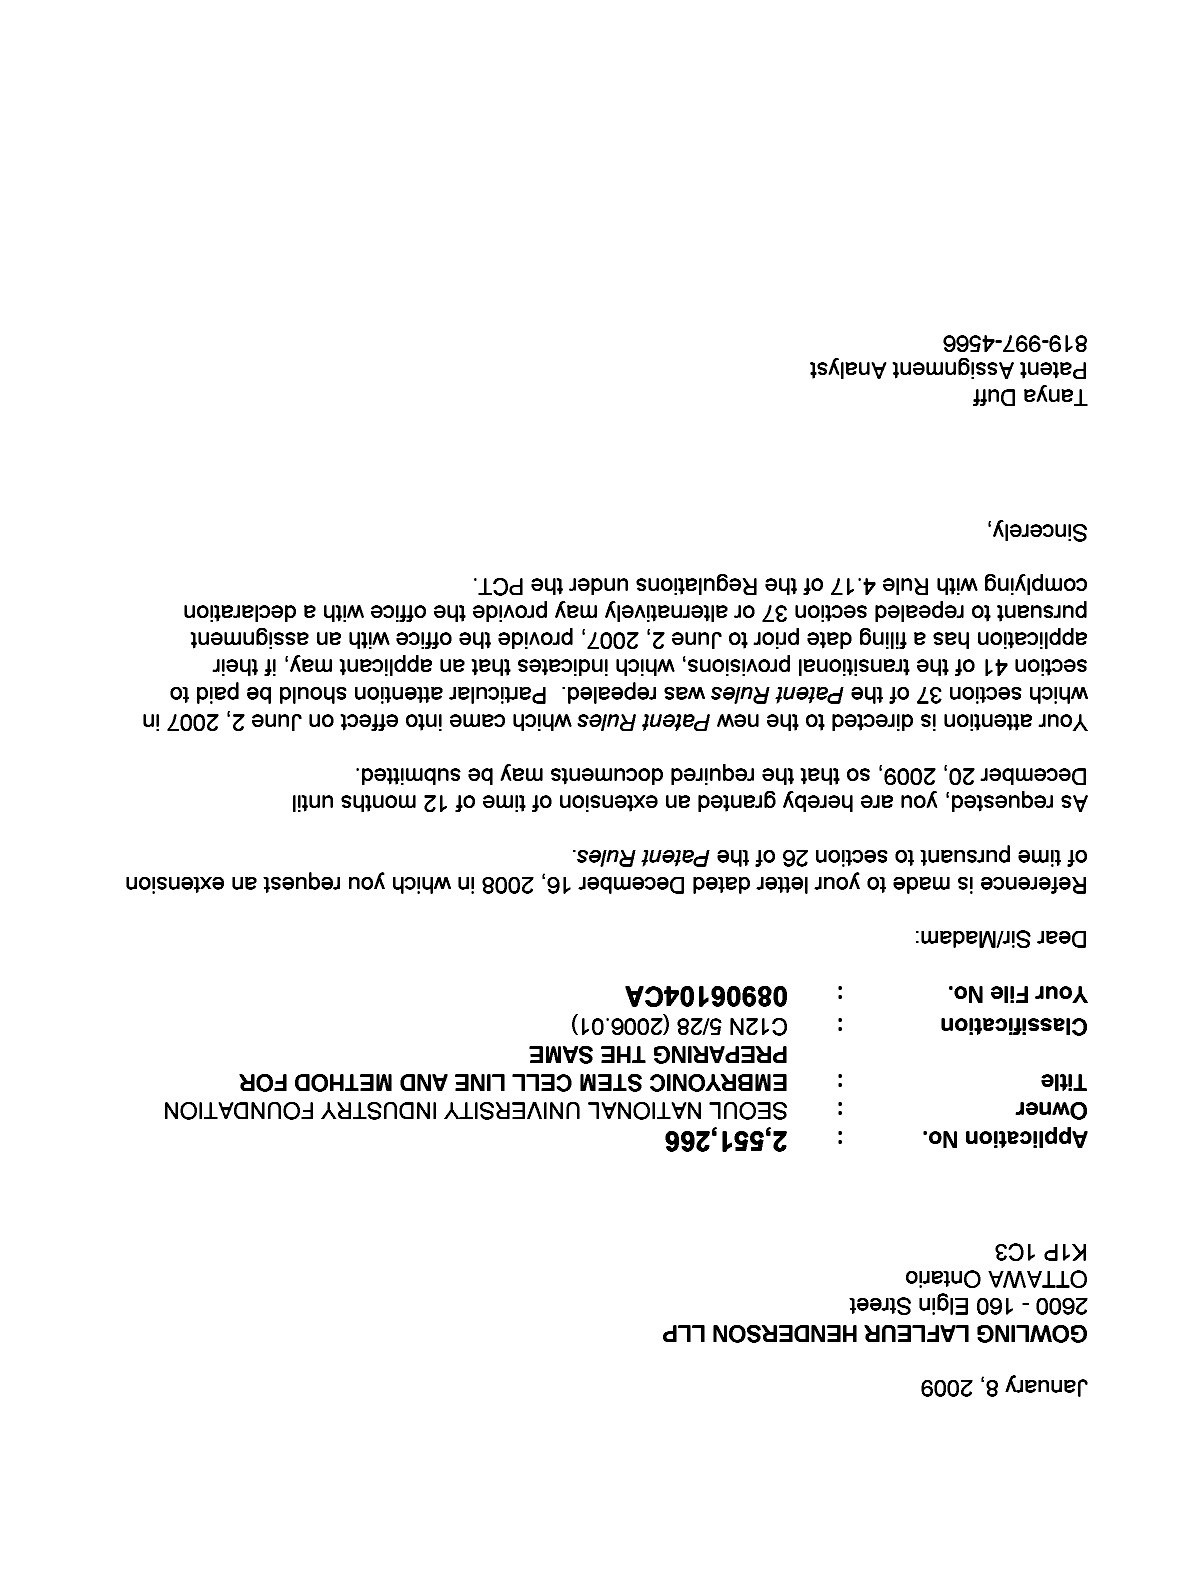 Canadian Patent Document 2551266. Correspondence 20081208. Image 1 of 1